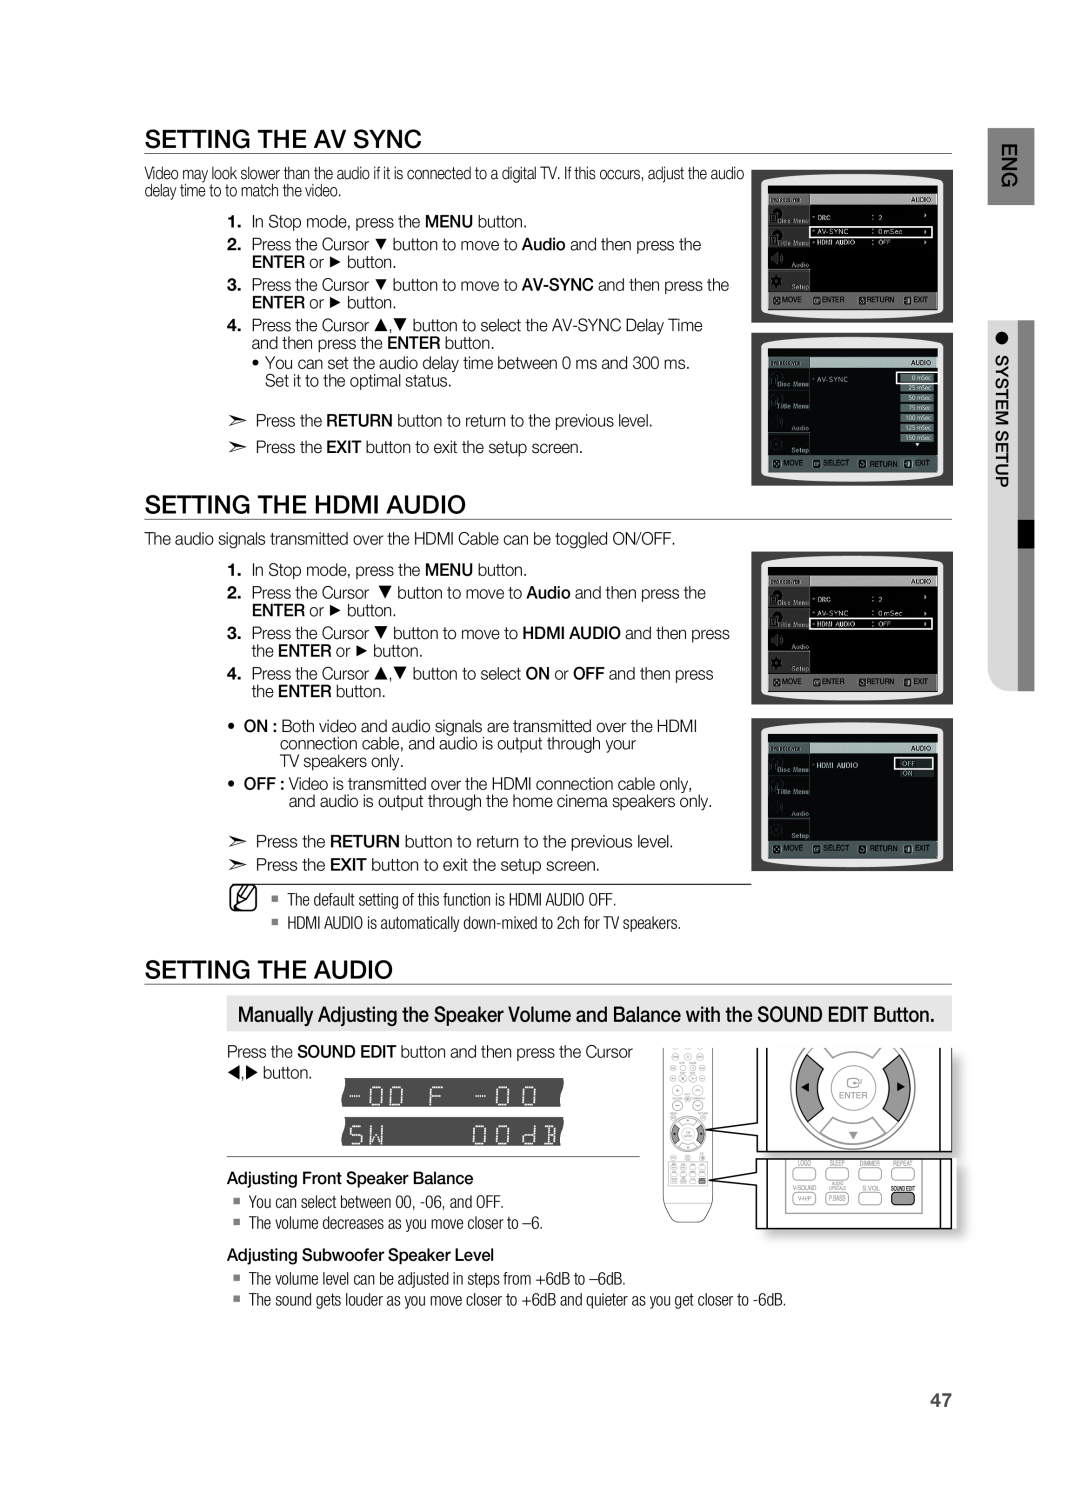 Samsung HT-X710 user manual Setting The Av Sync, Setting The Hdmi Audio, Setting The Audio 